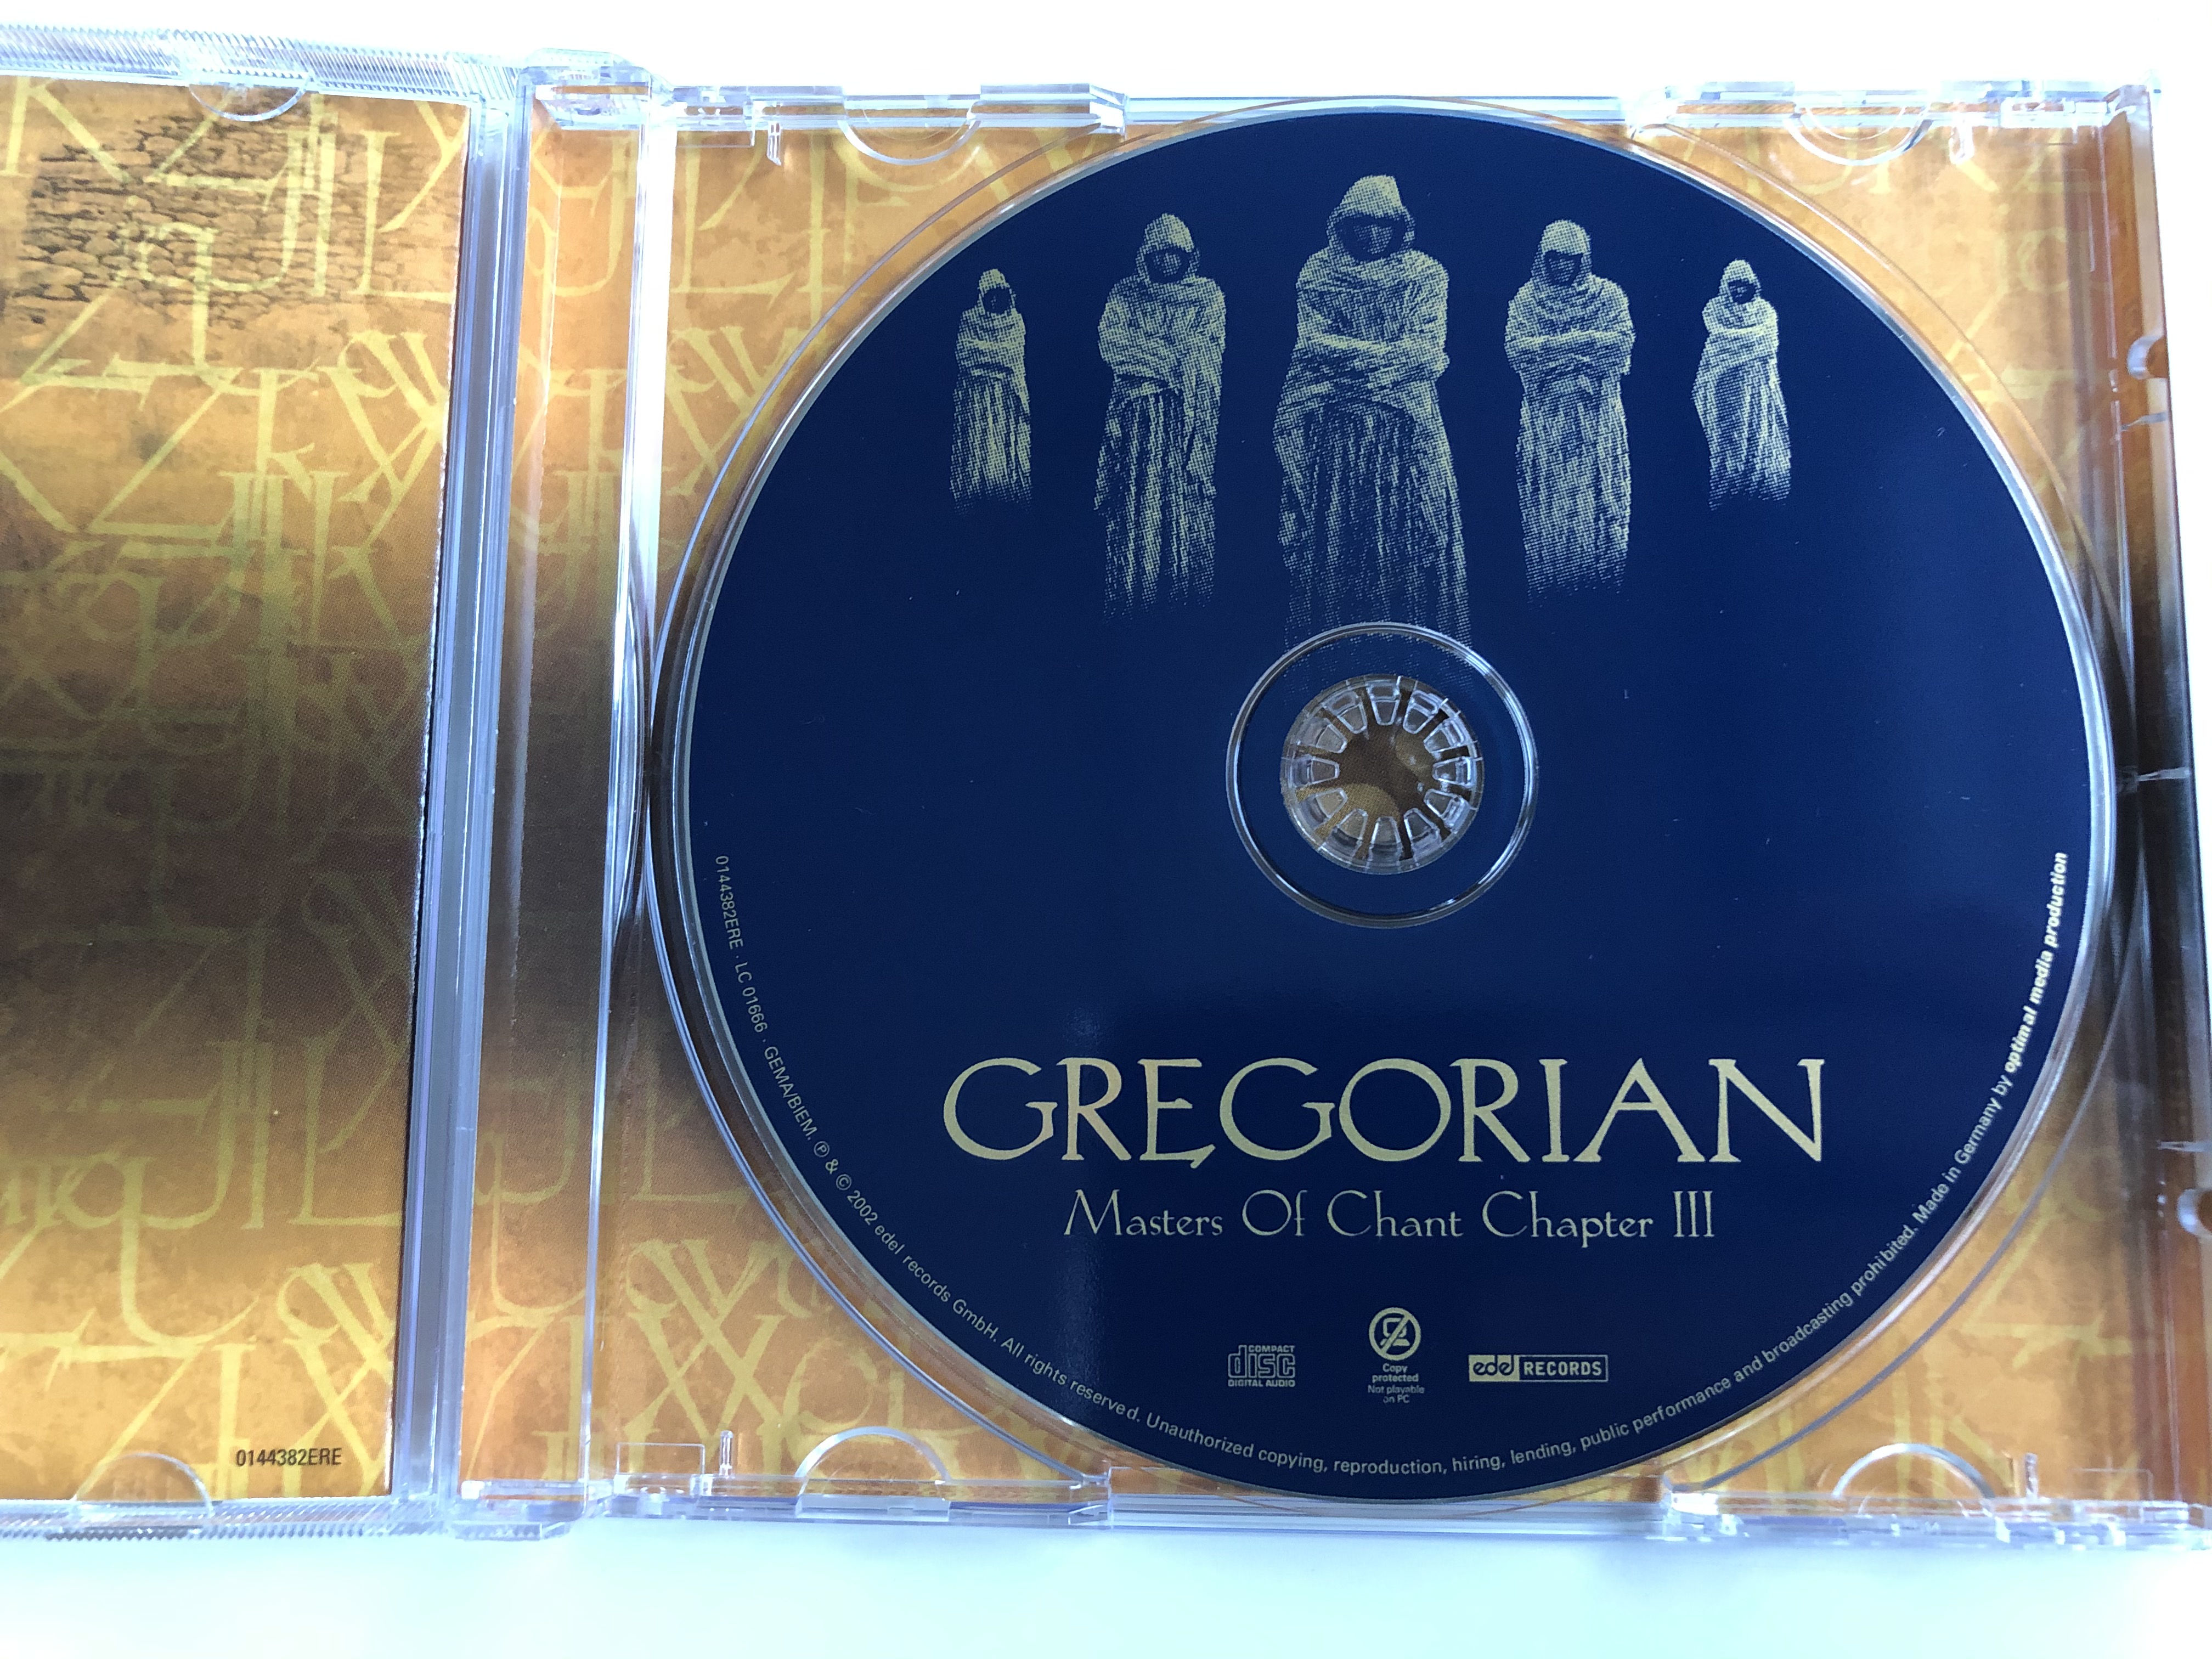 gregorian-masters-of-chant-chapter-iii-edel-records-audio-cd-2002-0142042-ere-3-.jpg